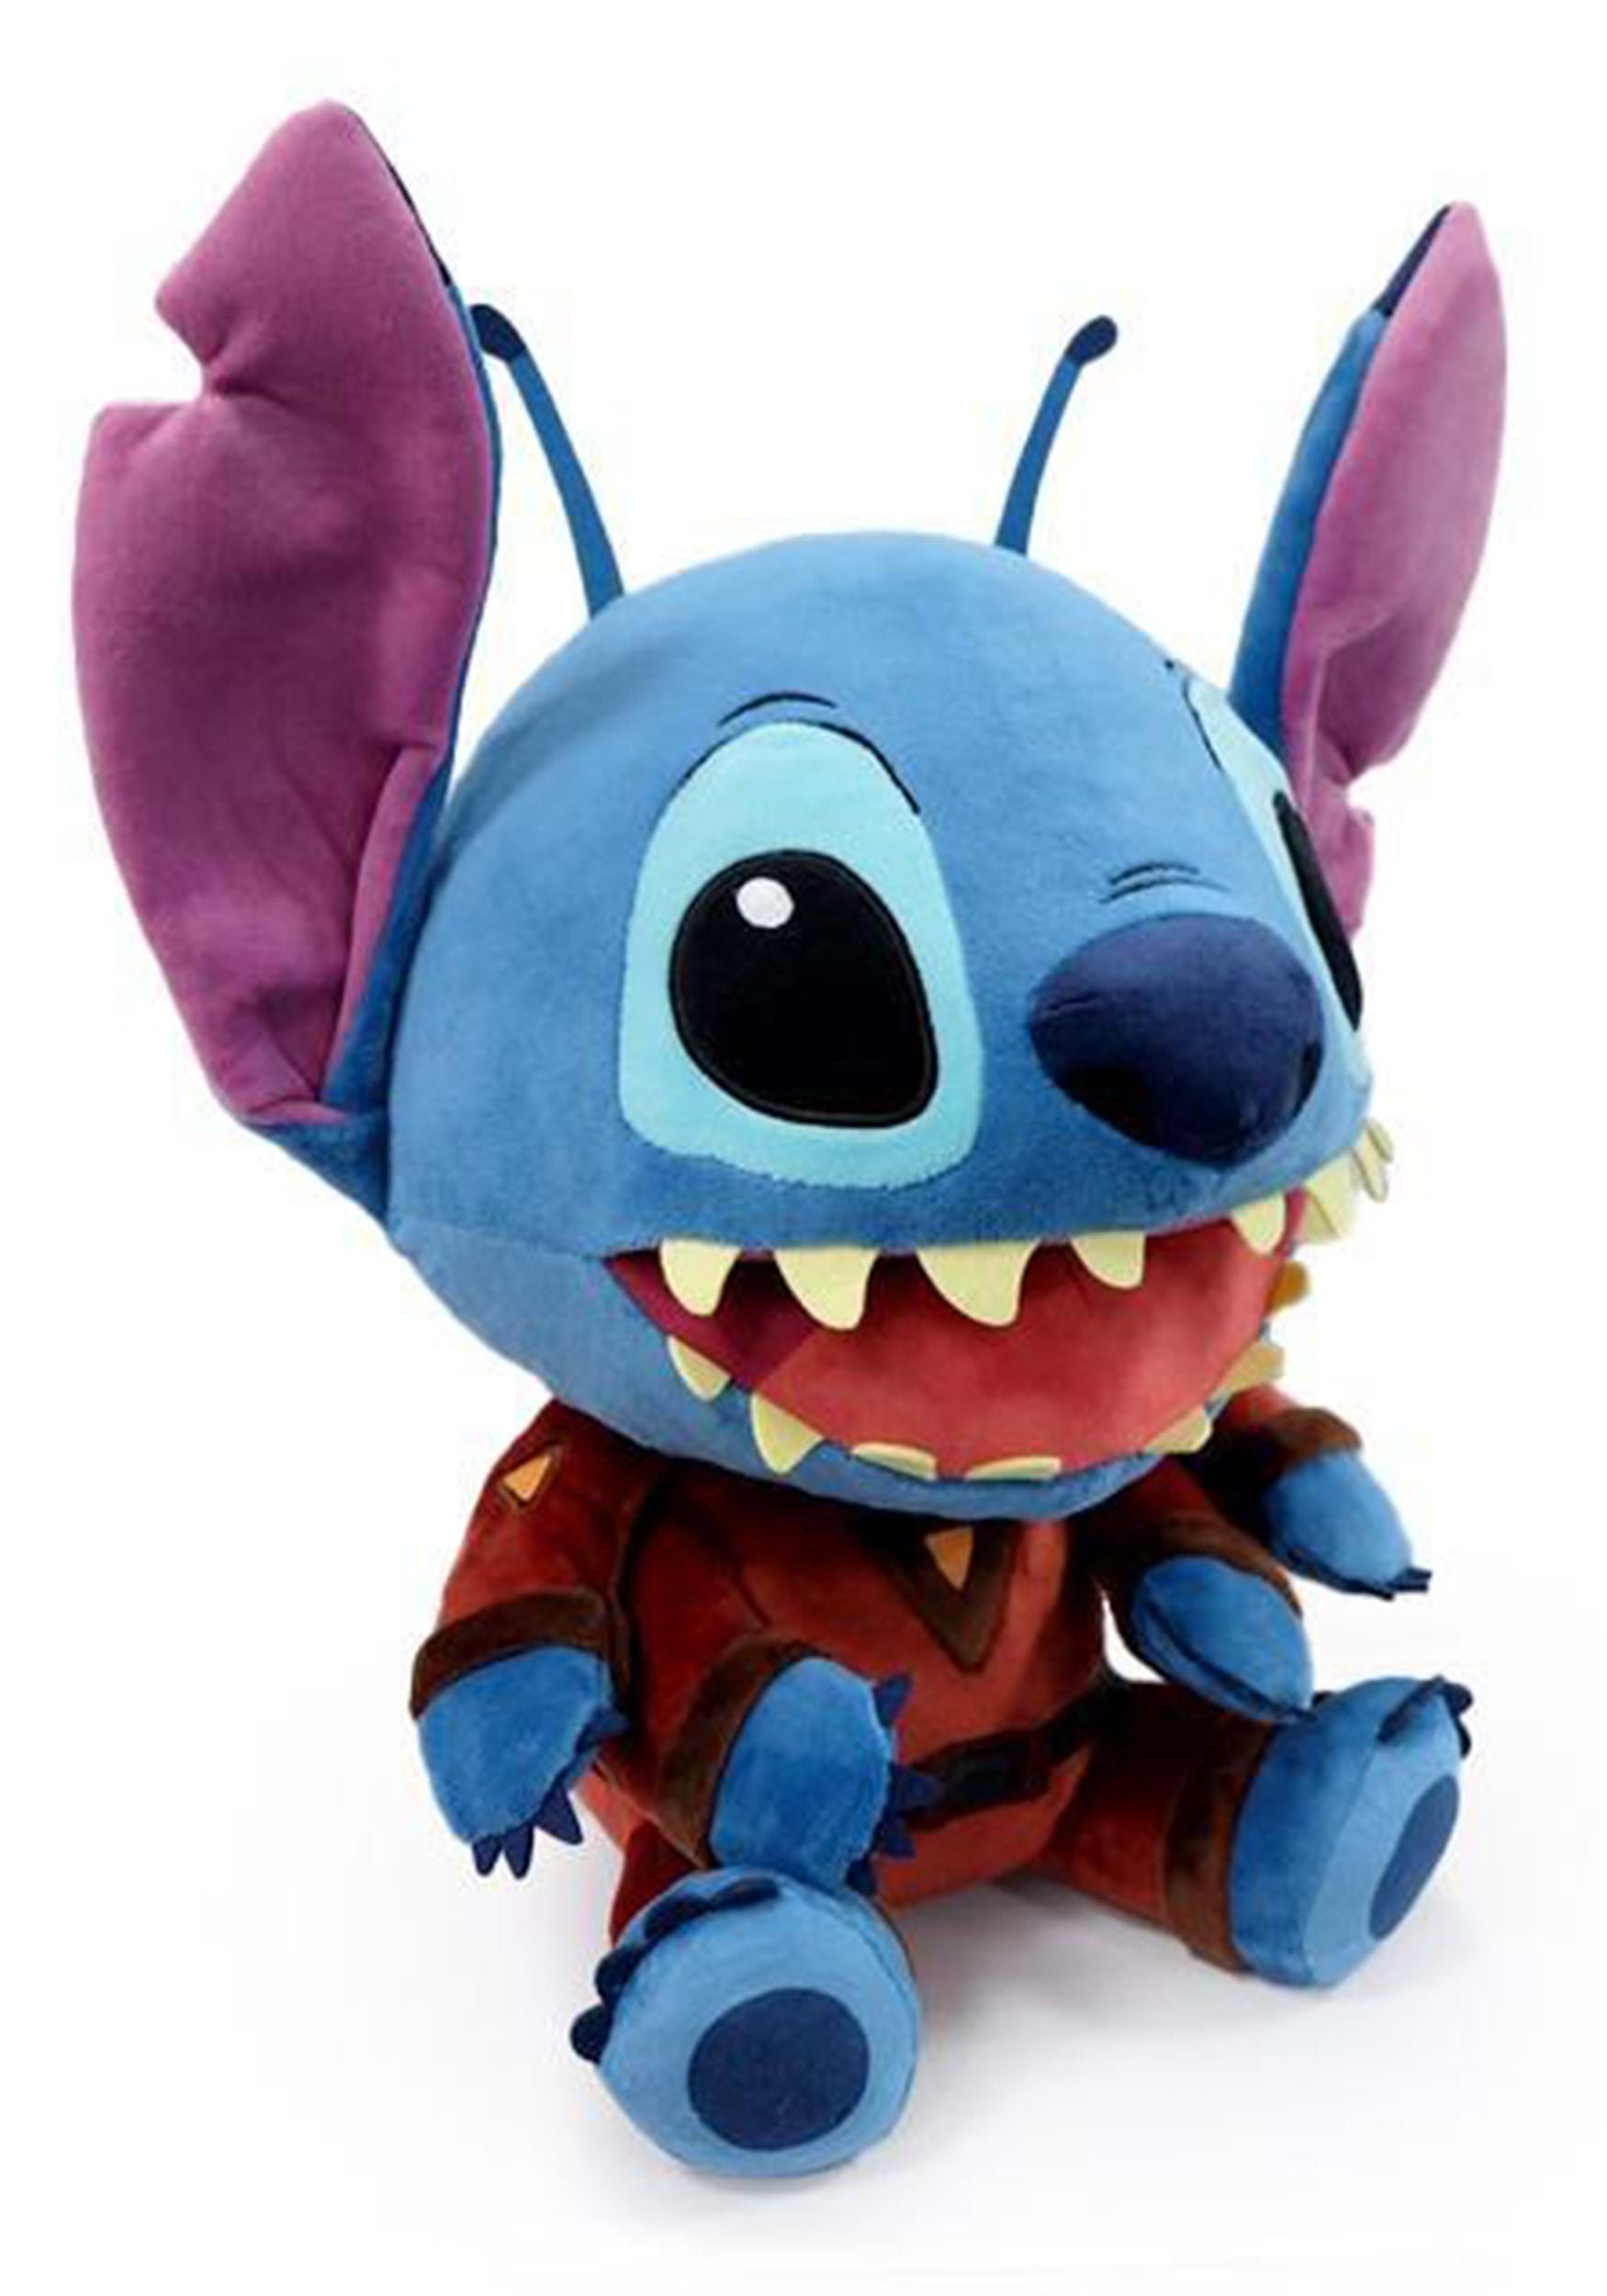 Disney Stitch Plush - Valentines Day - Small 10 inch